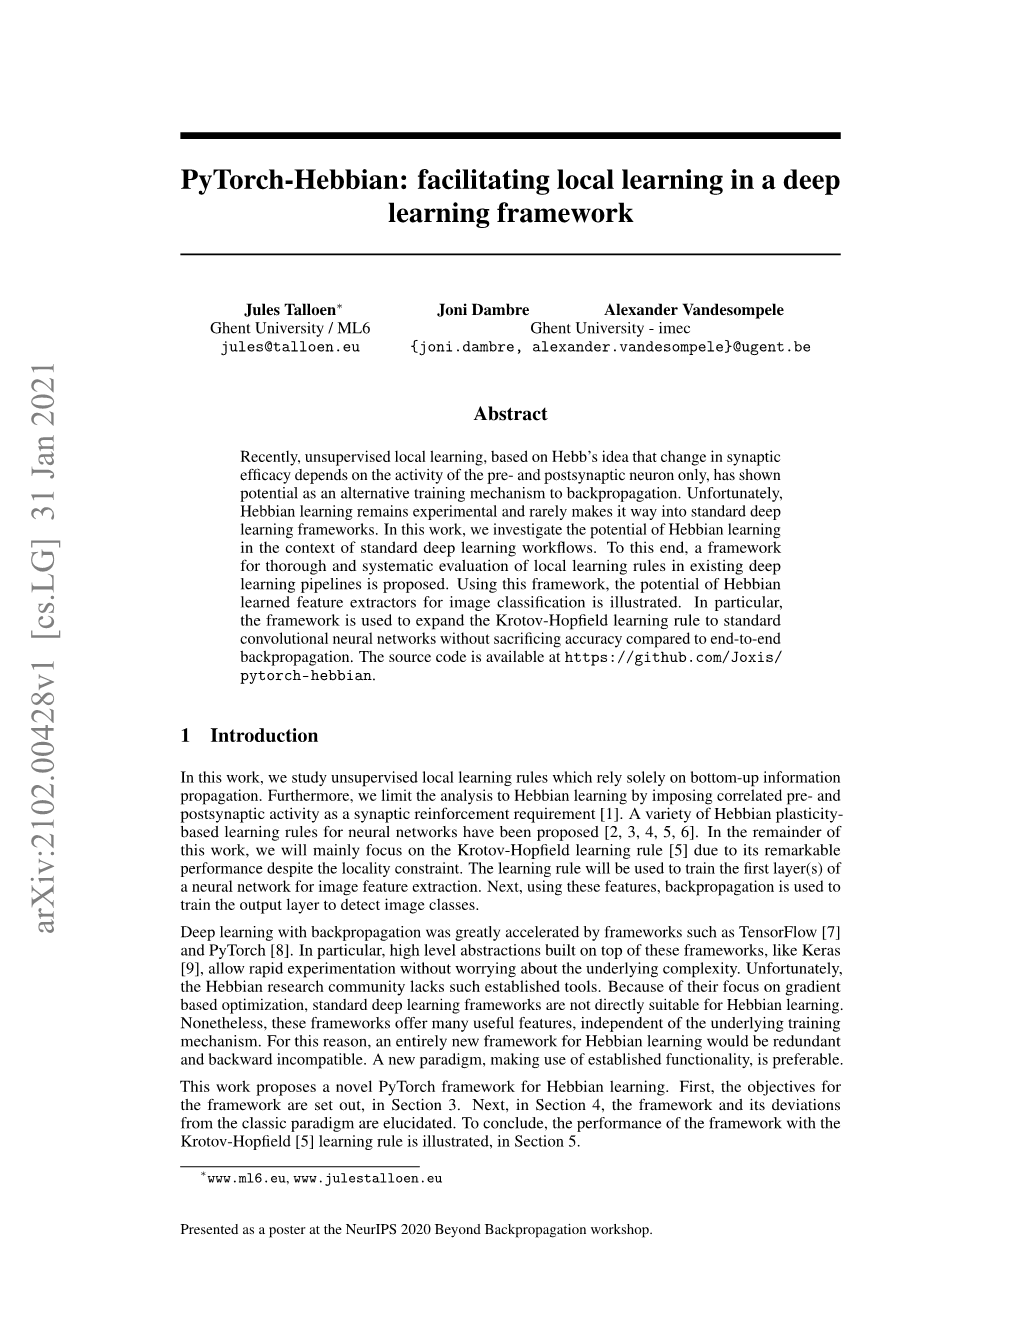 Pytorch-Hebbian: Facilitating Local Learning in a Deep Learning Framework